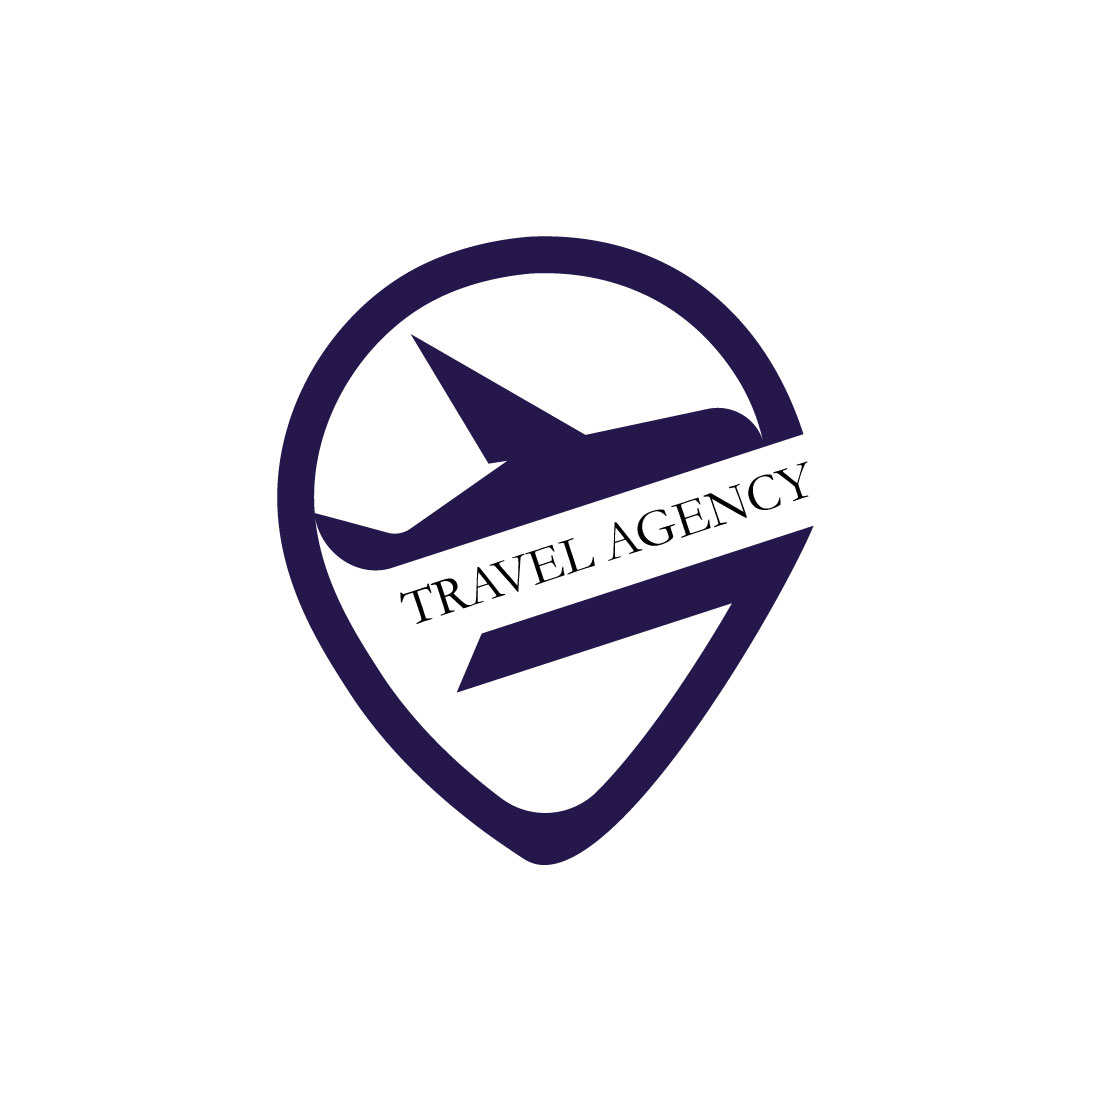 Travel agency logo design preview image.